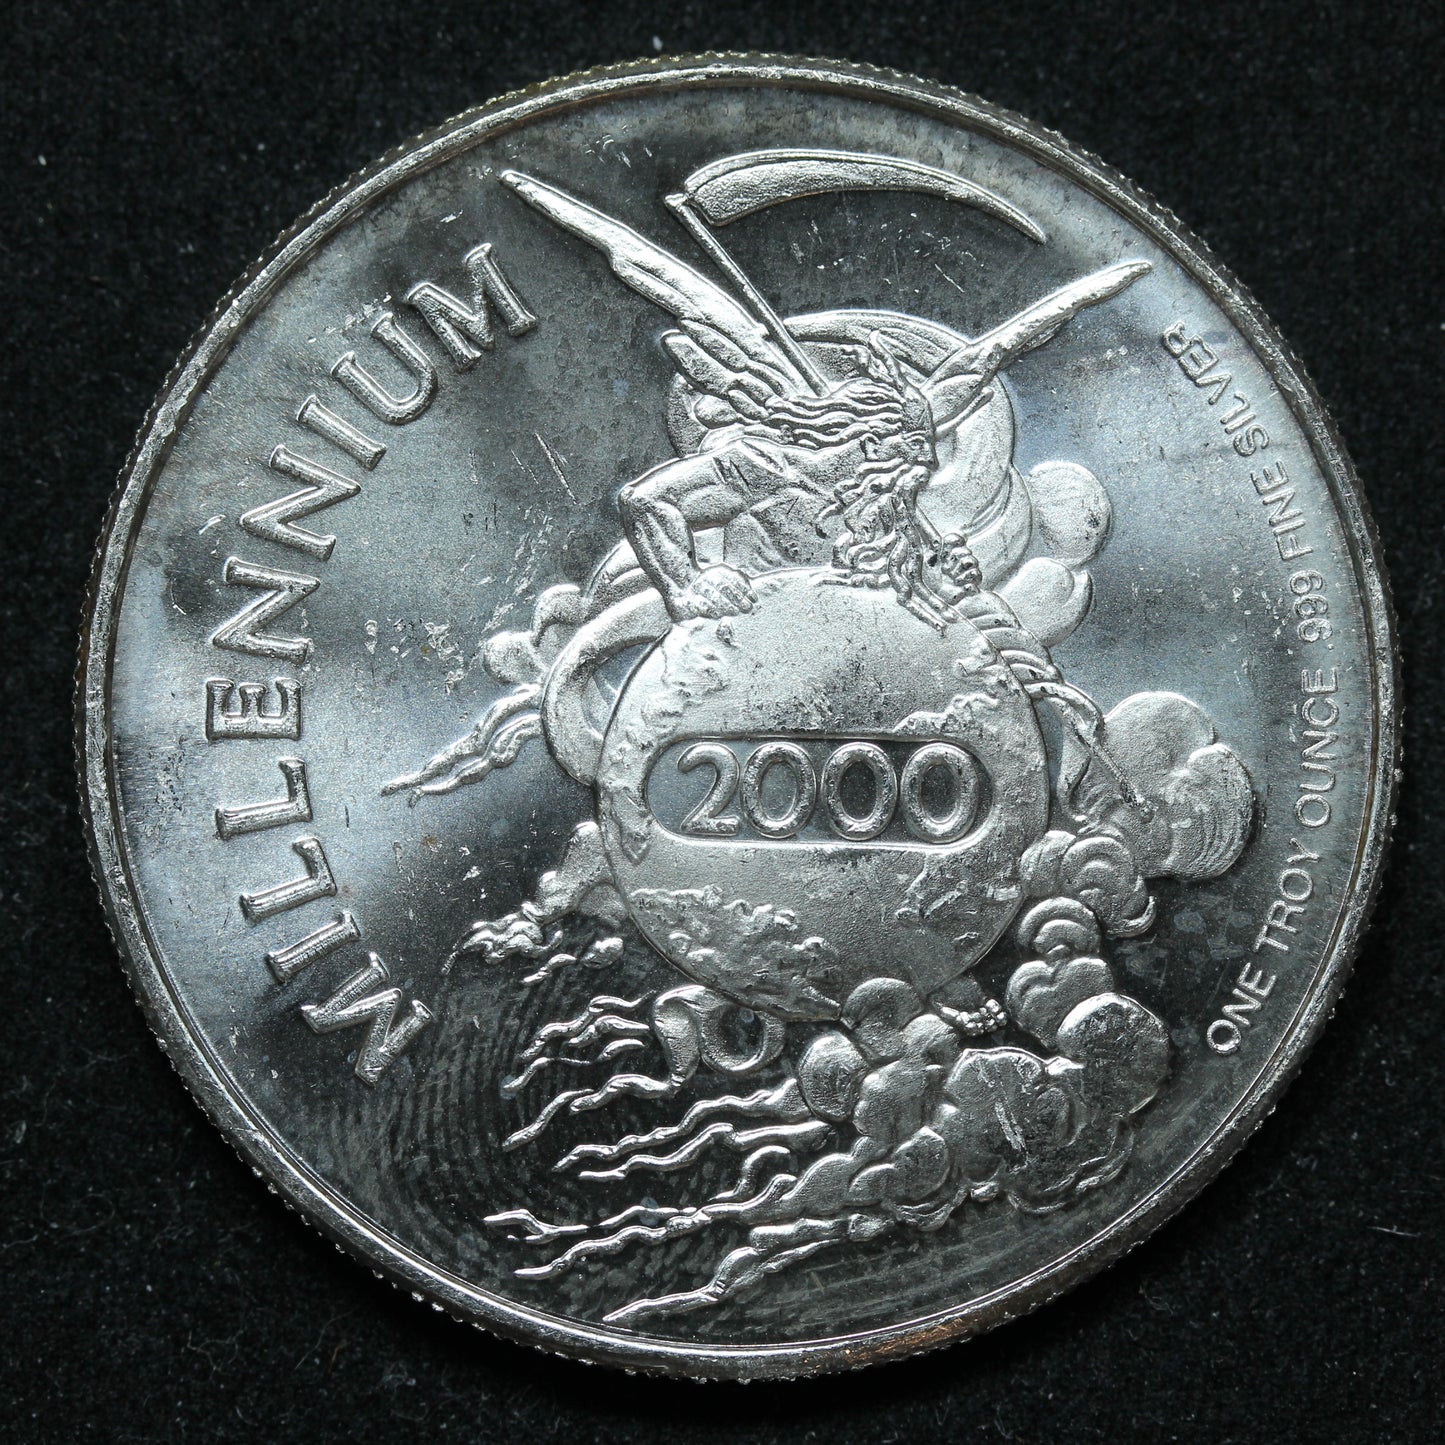 1 oz .999 Fine Silver - 20th Century Millennium 2000 Astronaut (#2)